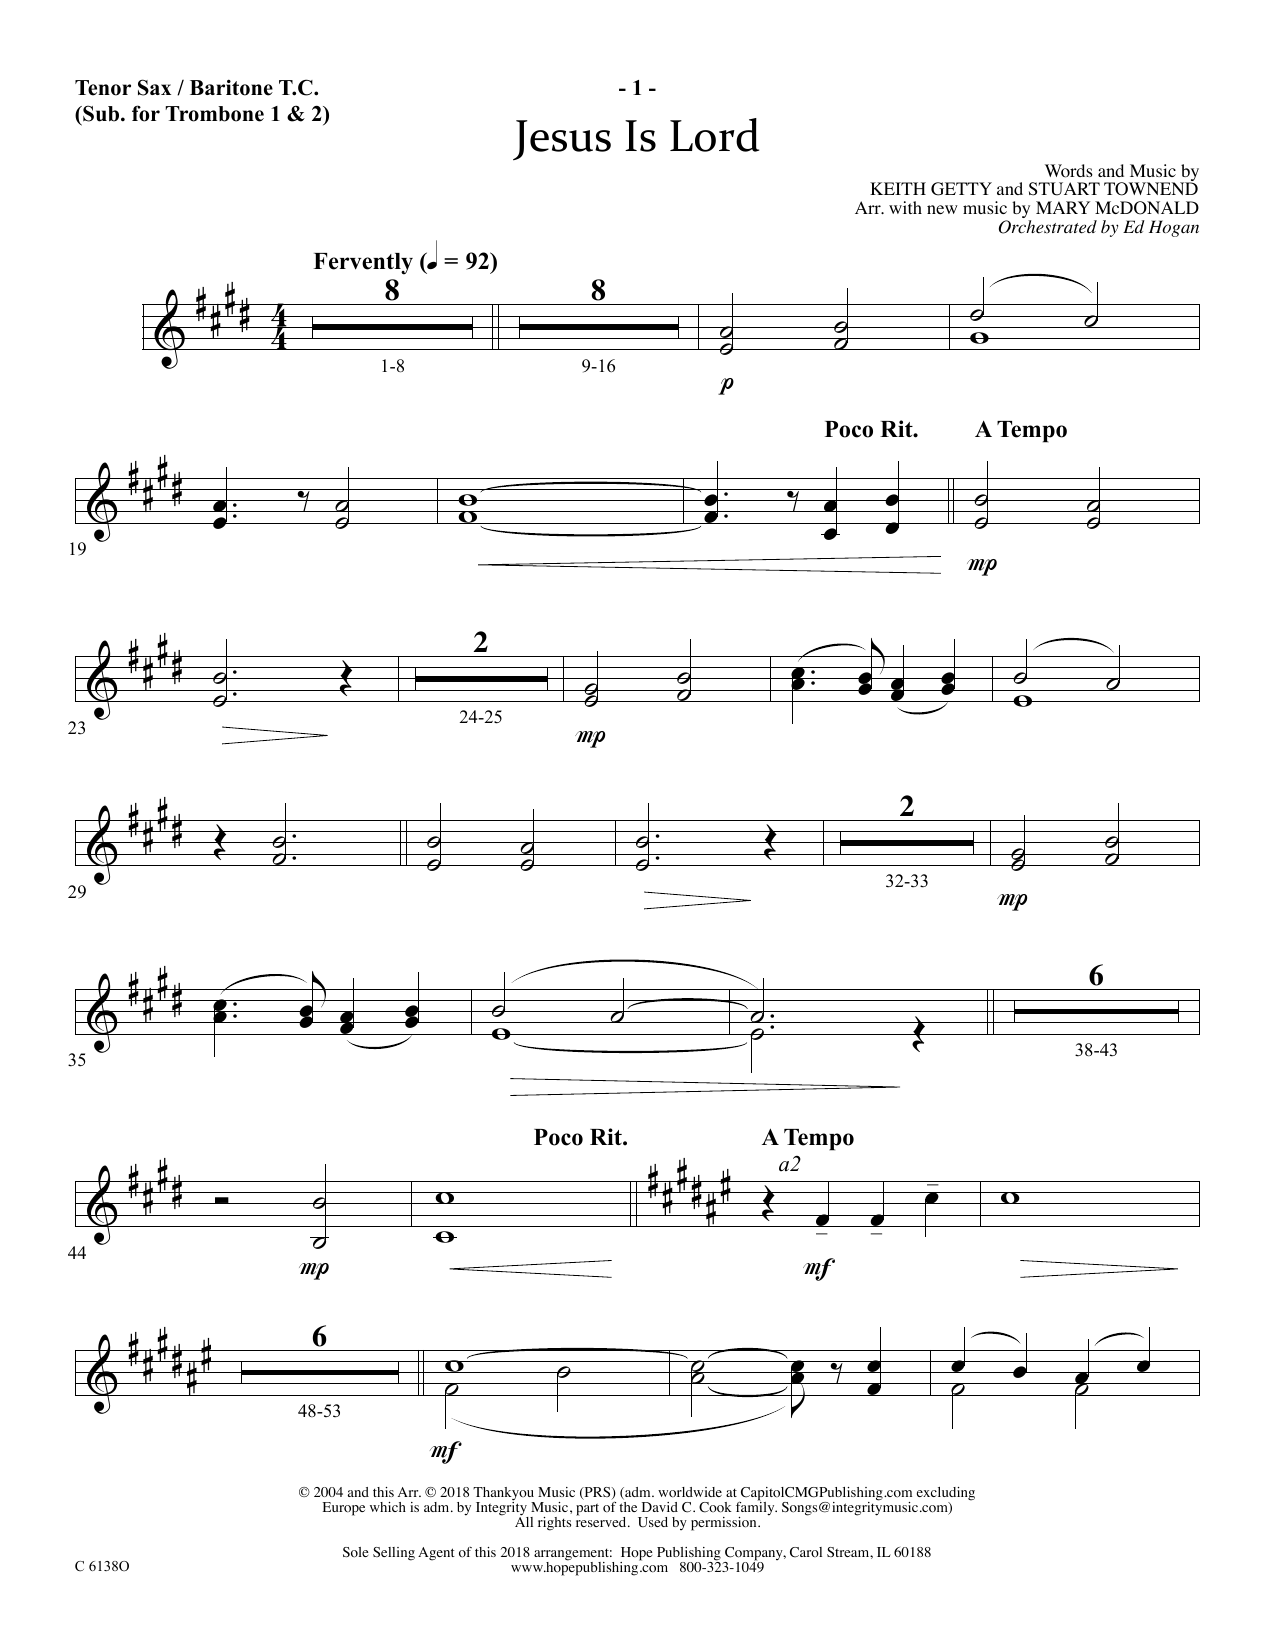 Ed Hogan Jesus Is Lord - Tenor Sax/BariTC (sub Tbn 1-2) Sheet Music Notes & Chords for Choir Instrumental Pak - Download or Print PDF